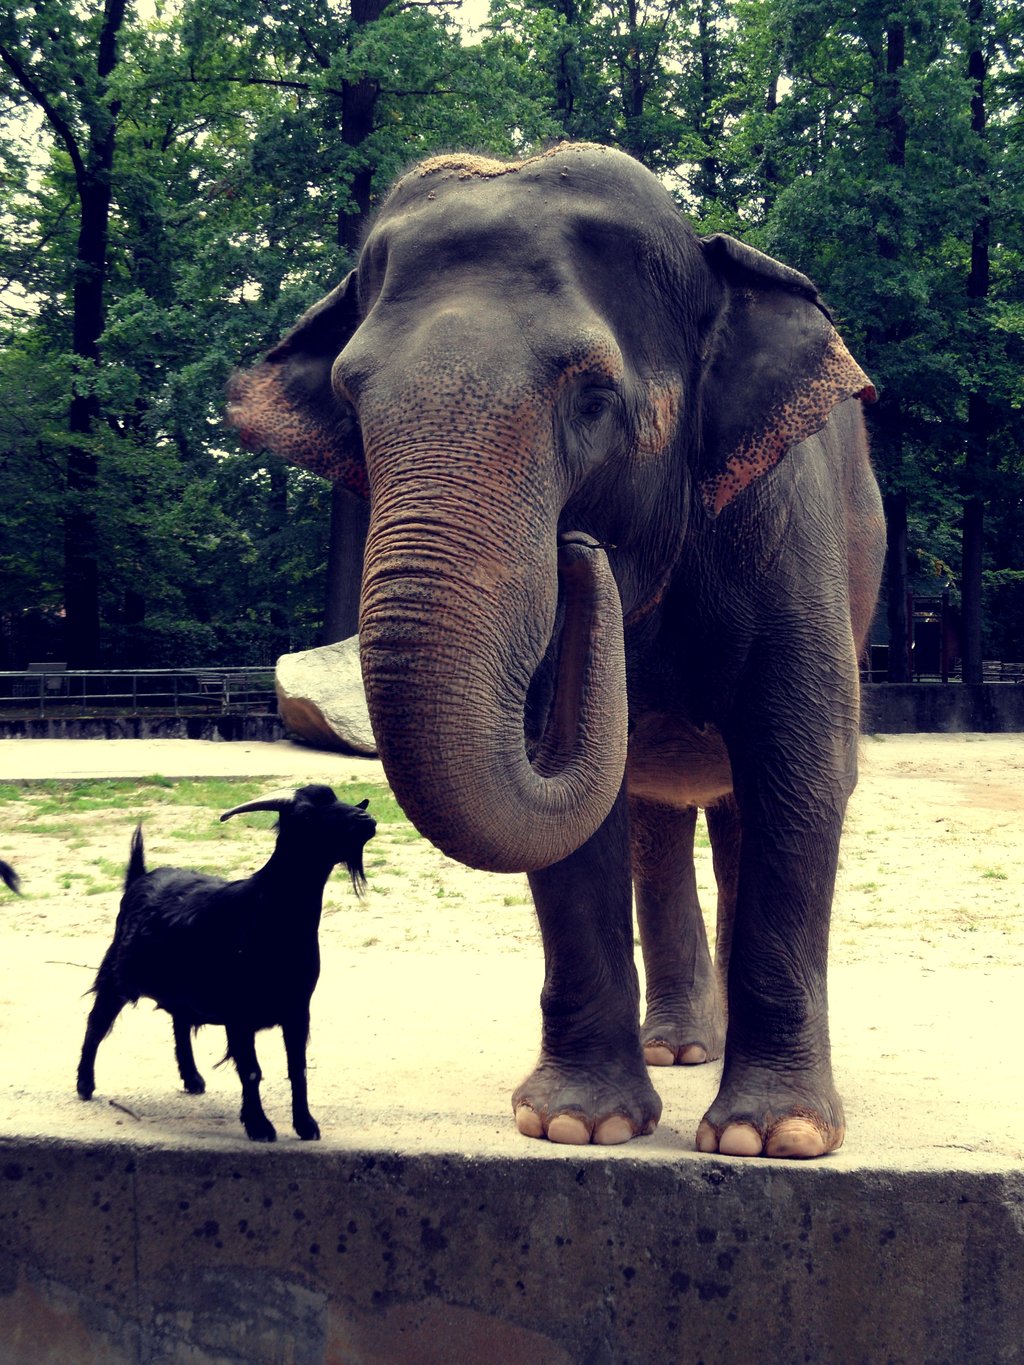 an_elephant_with_a_goat_by_mikushka-d5lt2l6.jpg